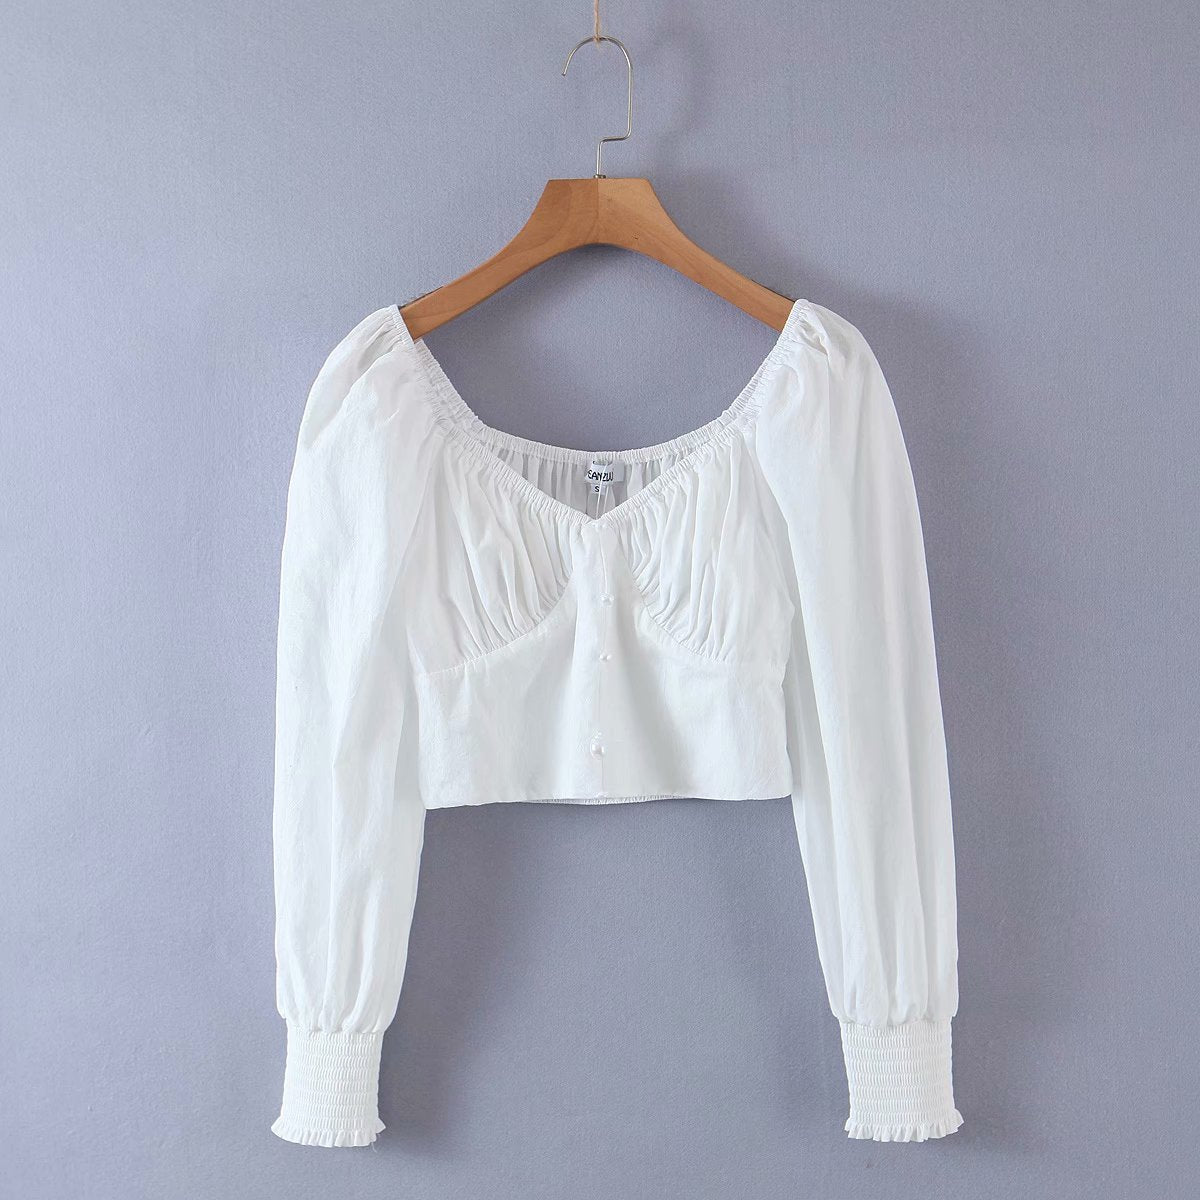 OOTDGIRL Autumn New Women's Fashion Retro Style Long Sleeve Back Elastic White Cotton Shirt Short Crop Blouse